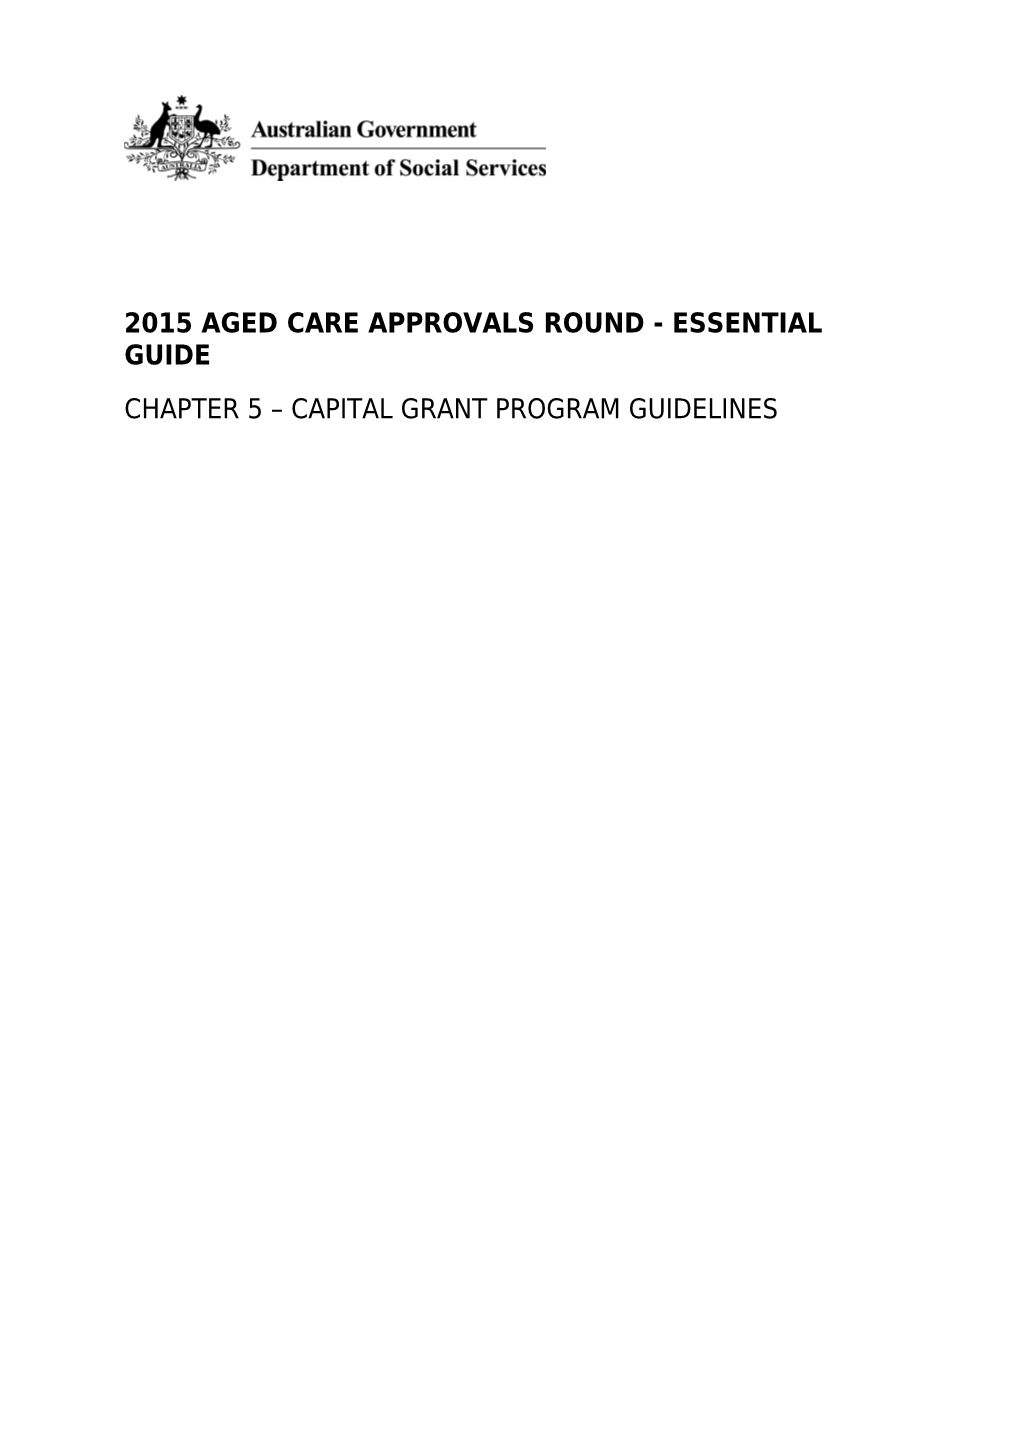 Chapter 5 Capital Grant Program Guidelines